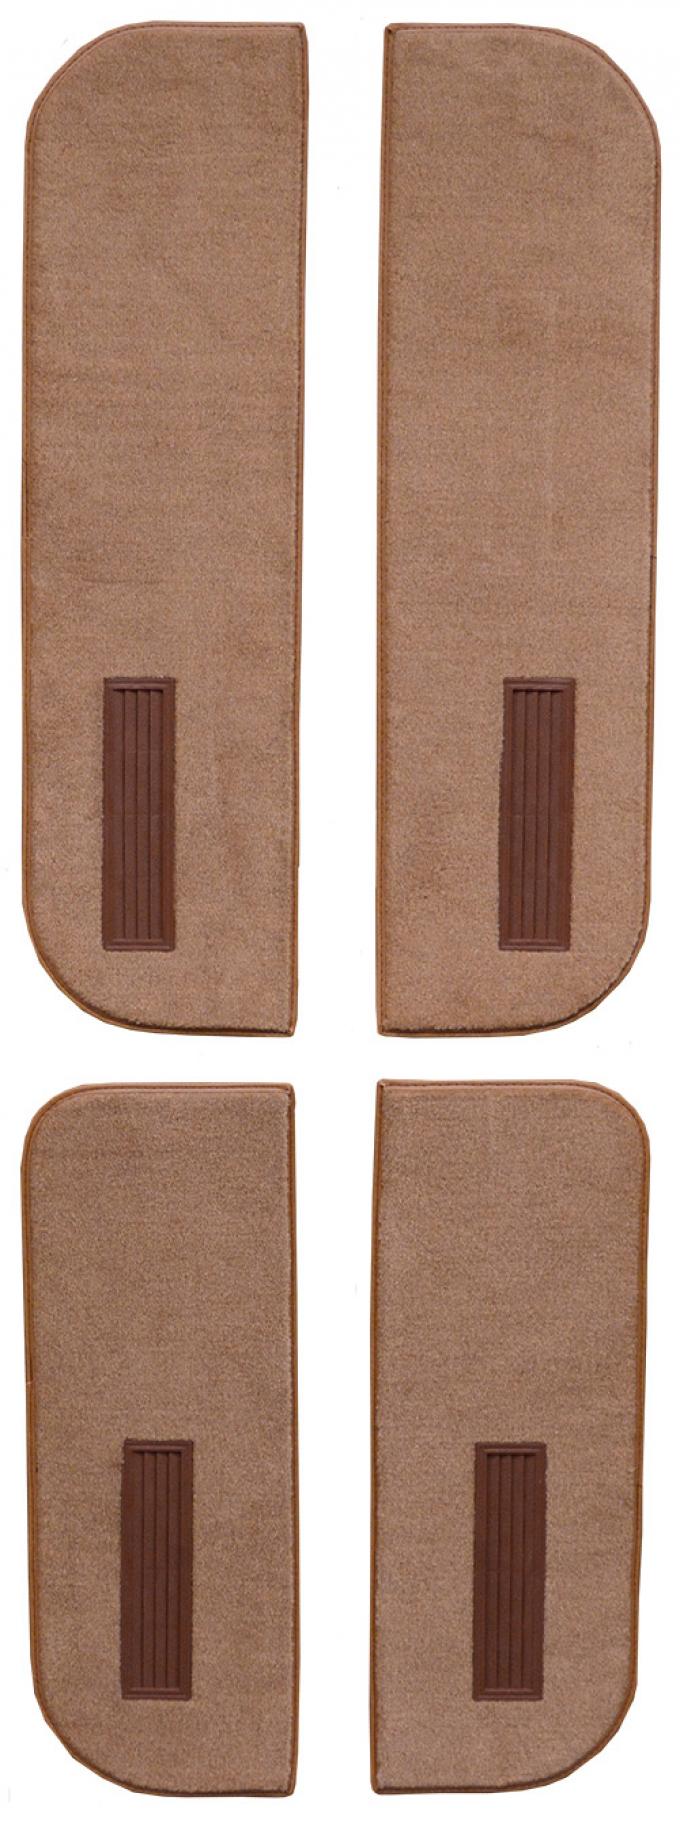 ACC 1989-1991 GMC V1500 Suburban Door Panel Inserts on Cardboard w/Vents 4pc Cutpile Carpet